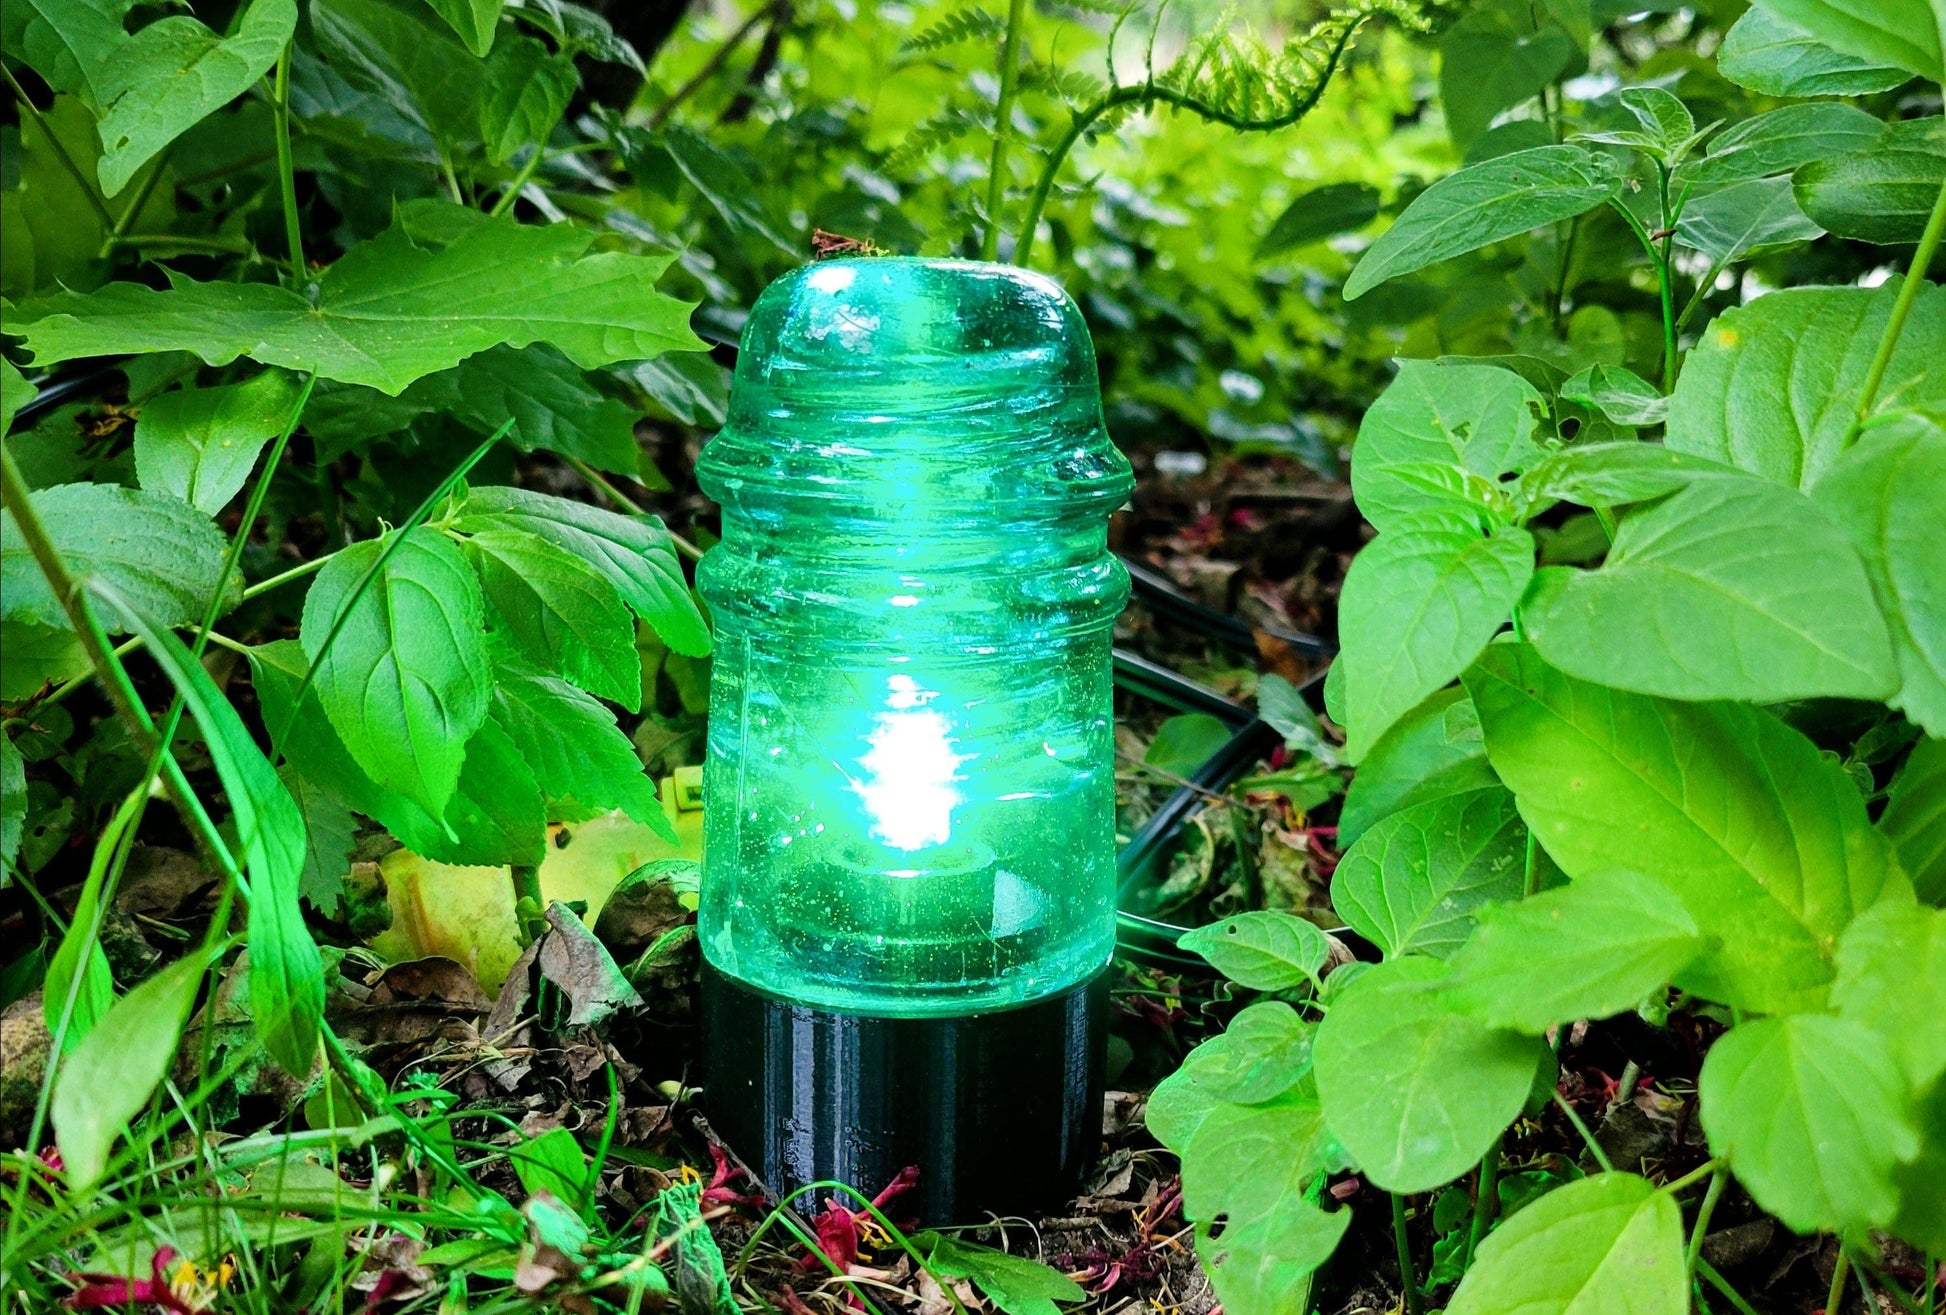 LightAndTimeArt Low voltage landscape light Low Voltage LED Landscape Lights,12V Lamp Base for "Hemingray-10, 12, AM. TEL." Glass Insulators, for Garden, Yard, Patio,Wall,Lawn